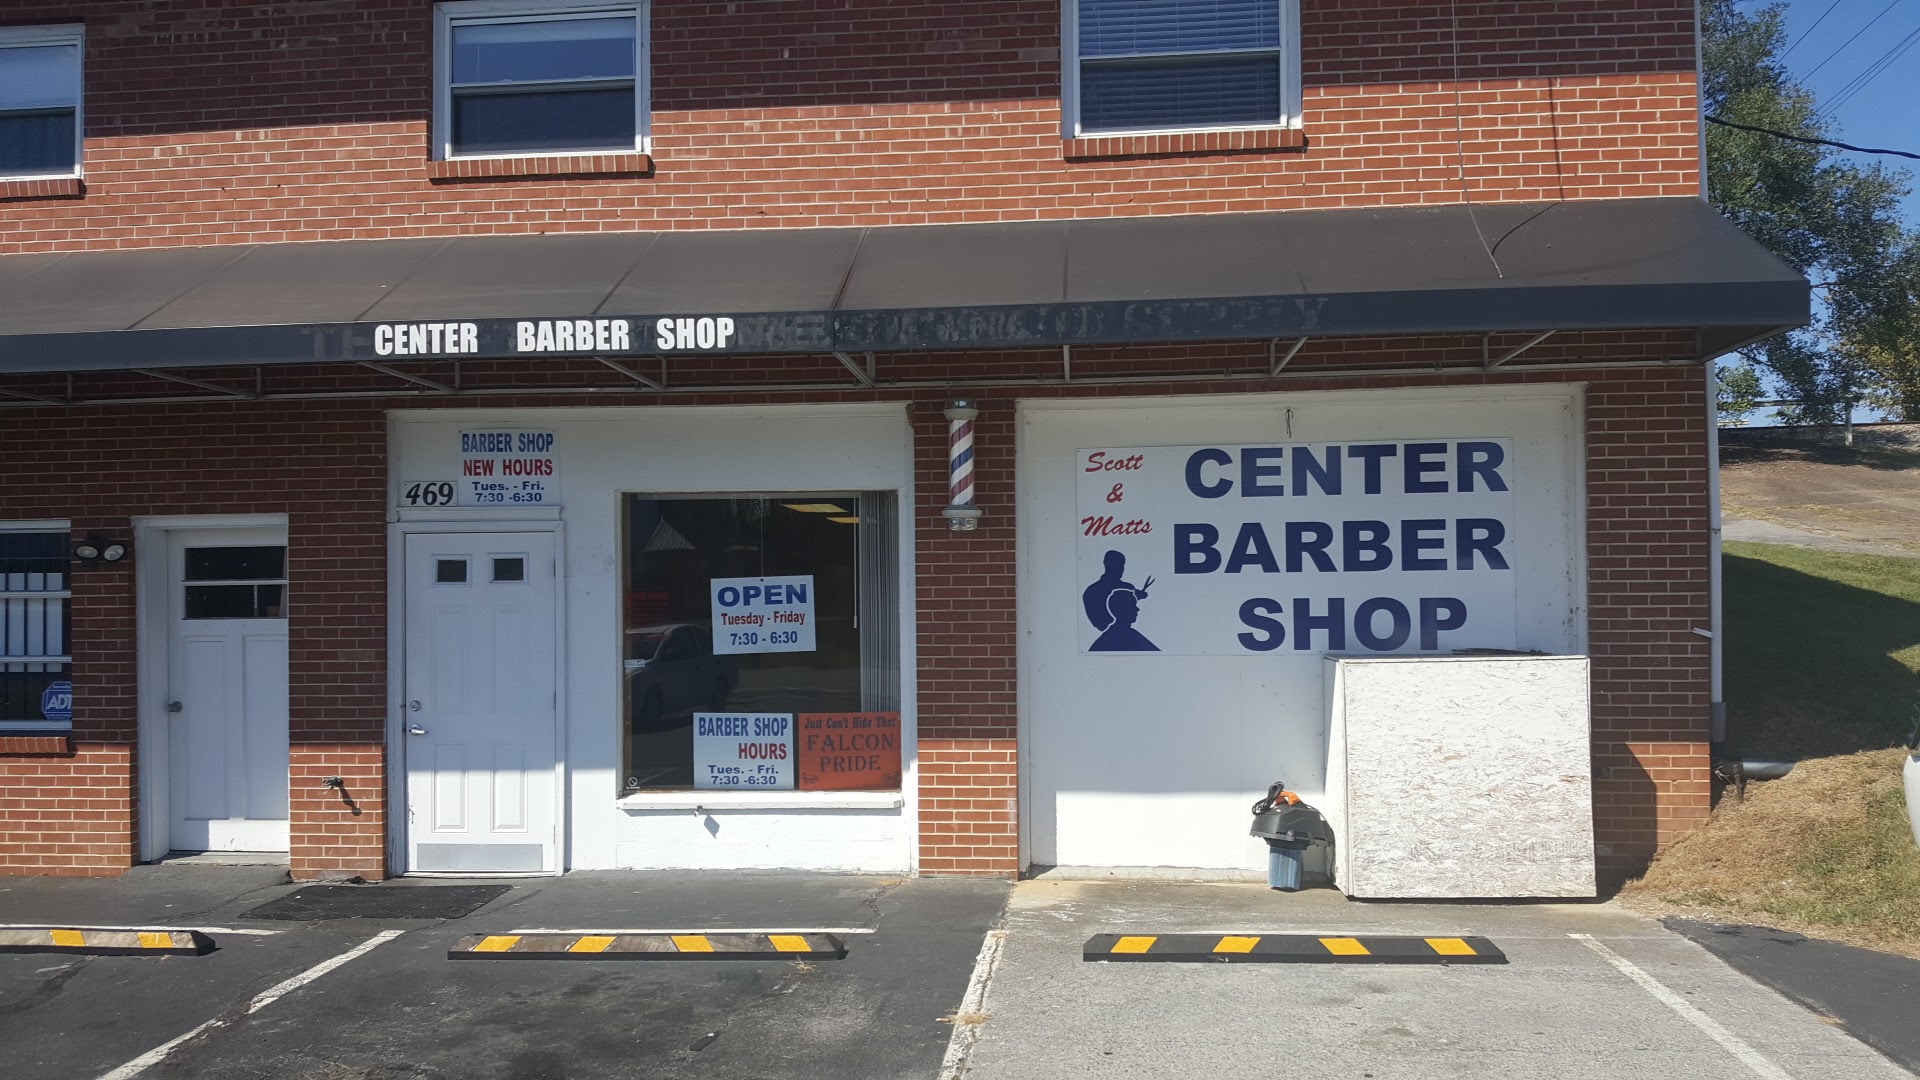 Center Barber Shop 469 E Main Blvd, Church Hill Tennessee 37642